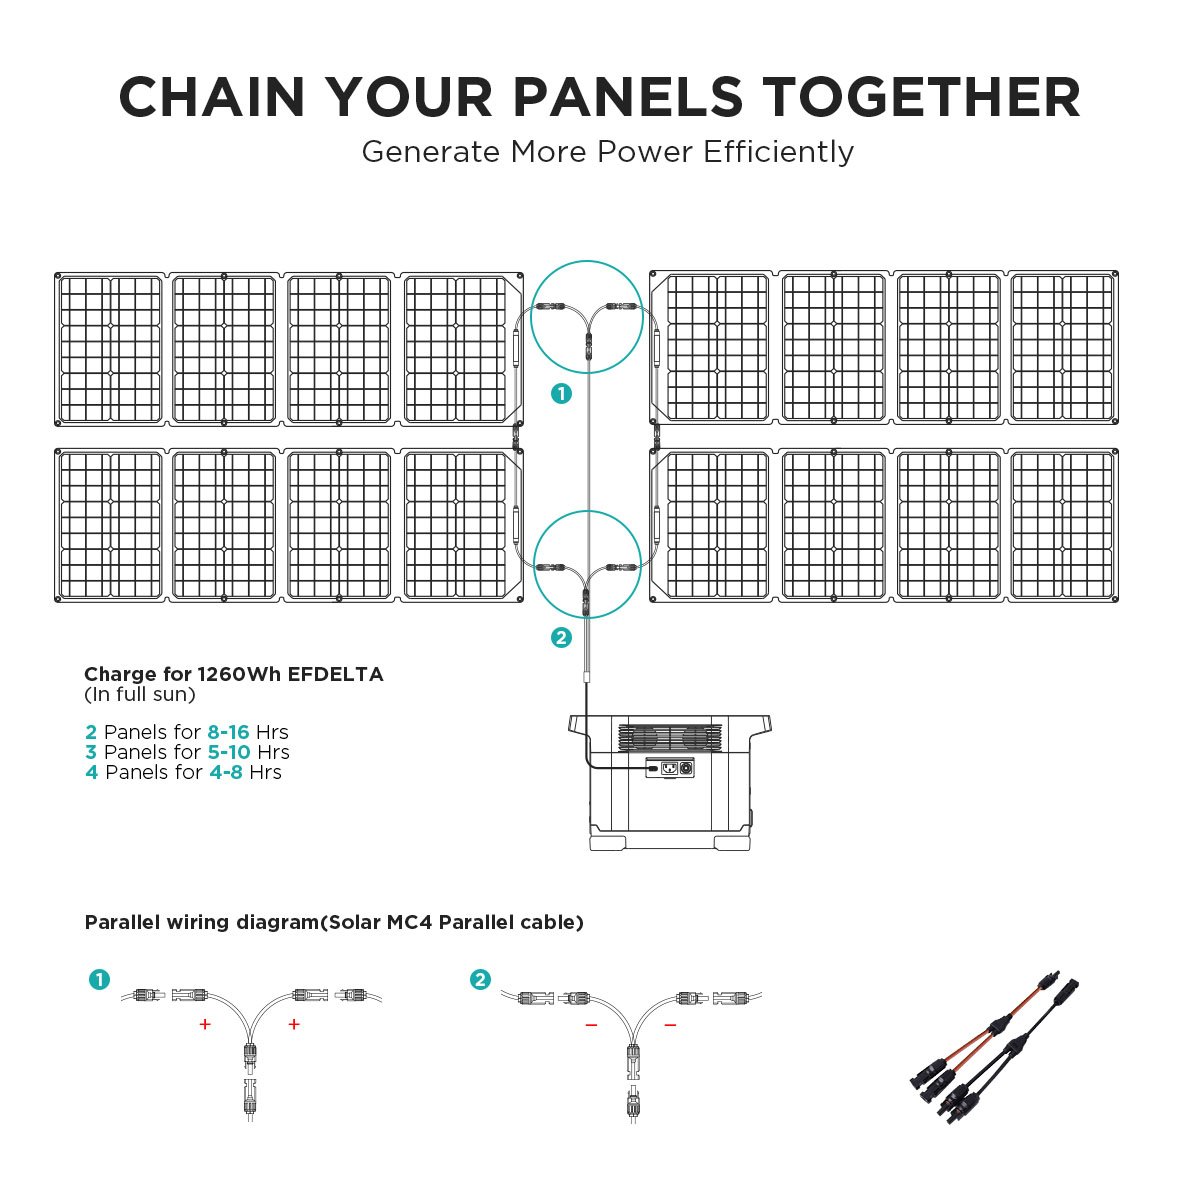 How to Chain EcoFlow 110W Solar Panels